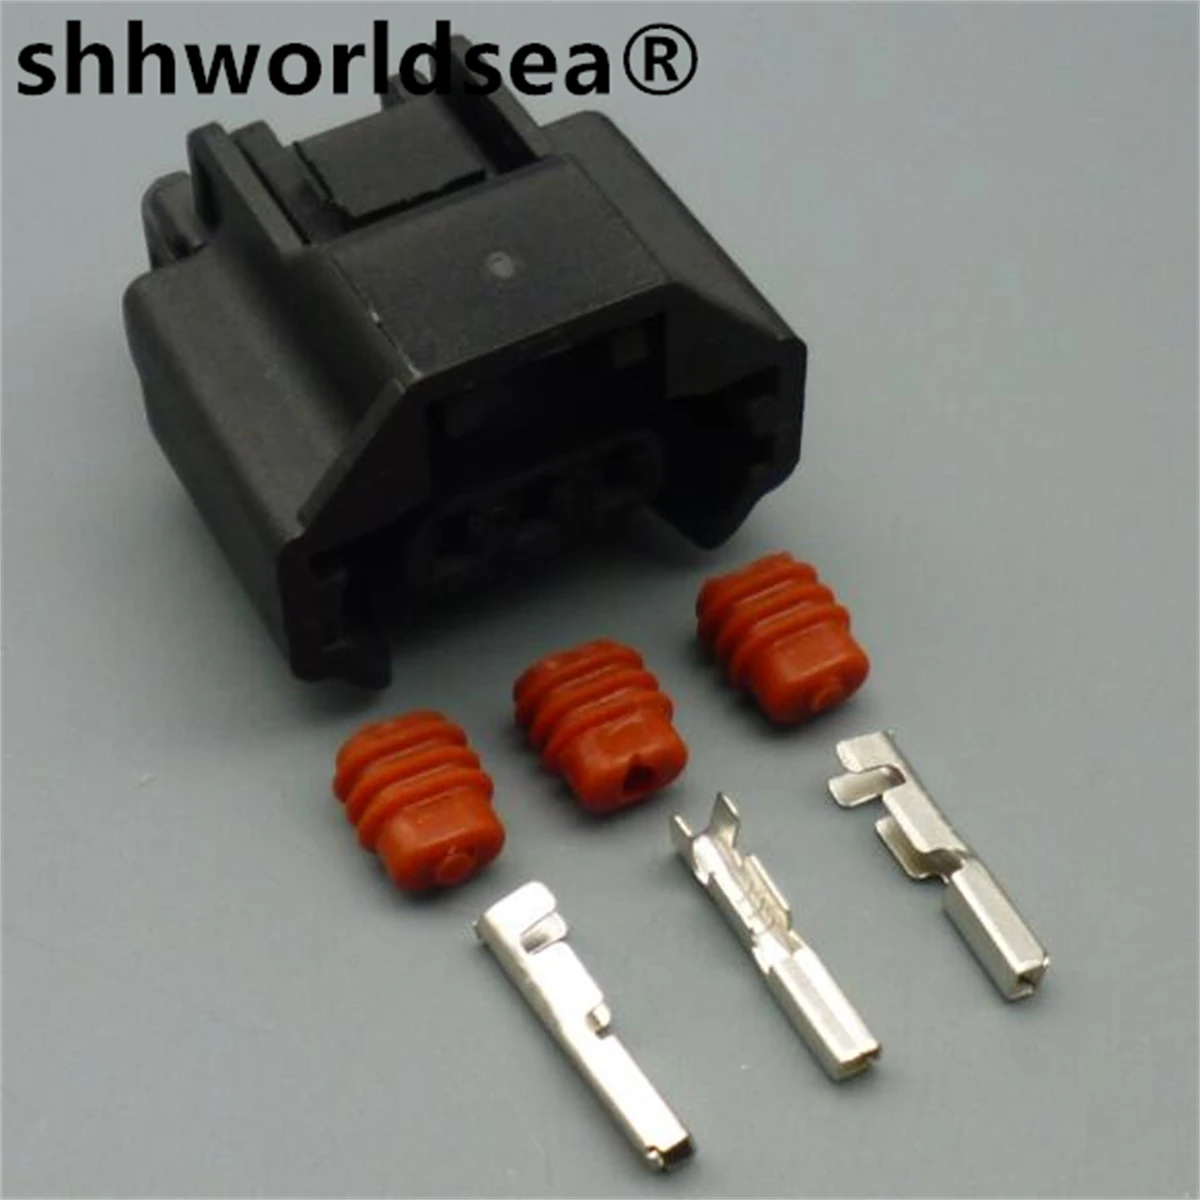 

shhworldsea 3 Pin 7223-6536-30 Auto Front Camshaft Sensor Connector Air Conditioning Pressure Switch Plug For TEANA HYUNDAI